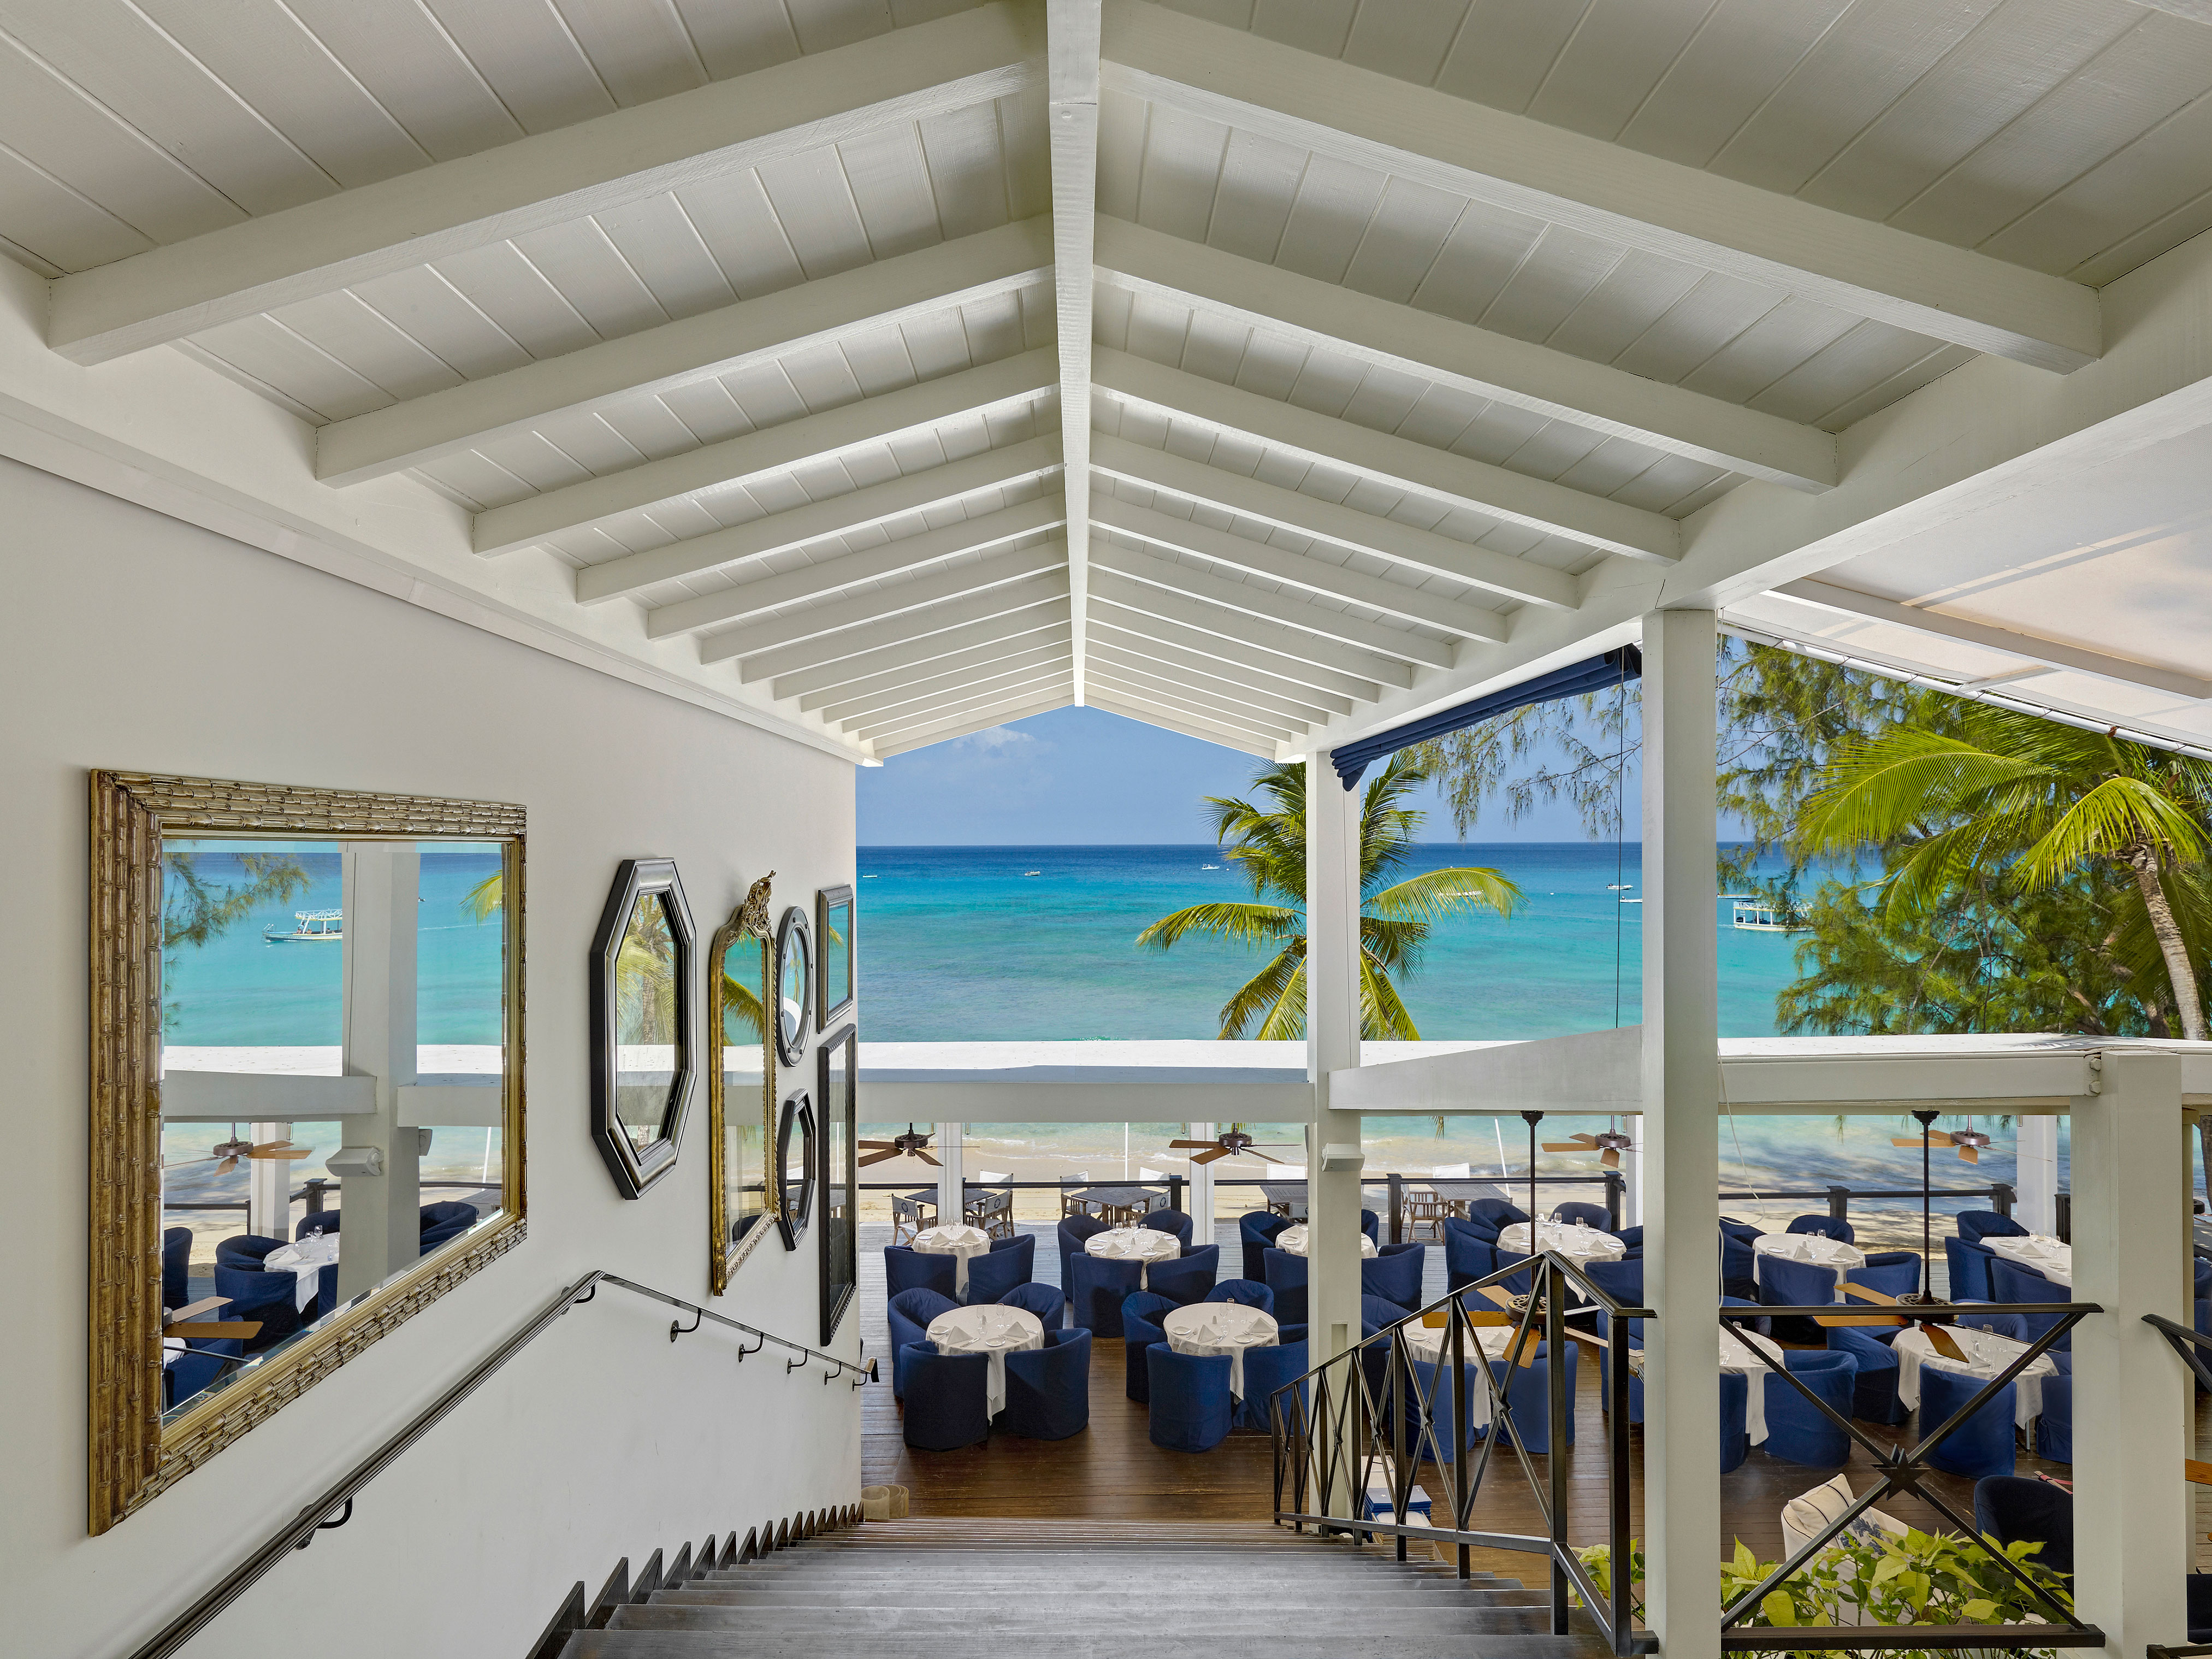 The Lone Star's popular restaurant overlooking the Atlantic Ocean